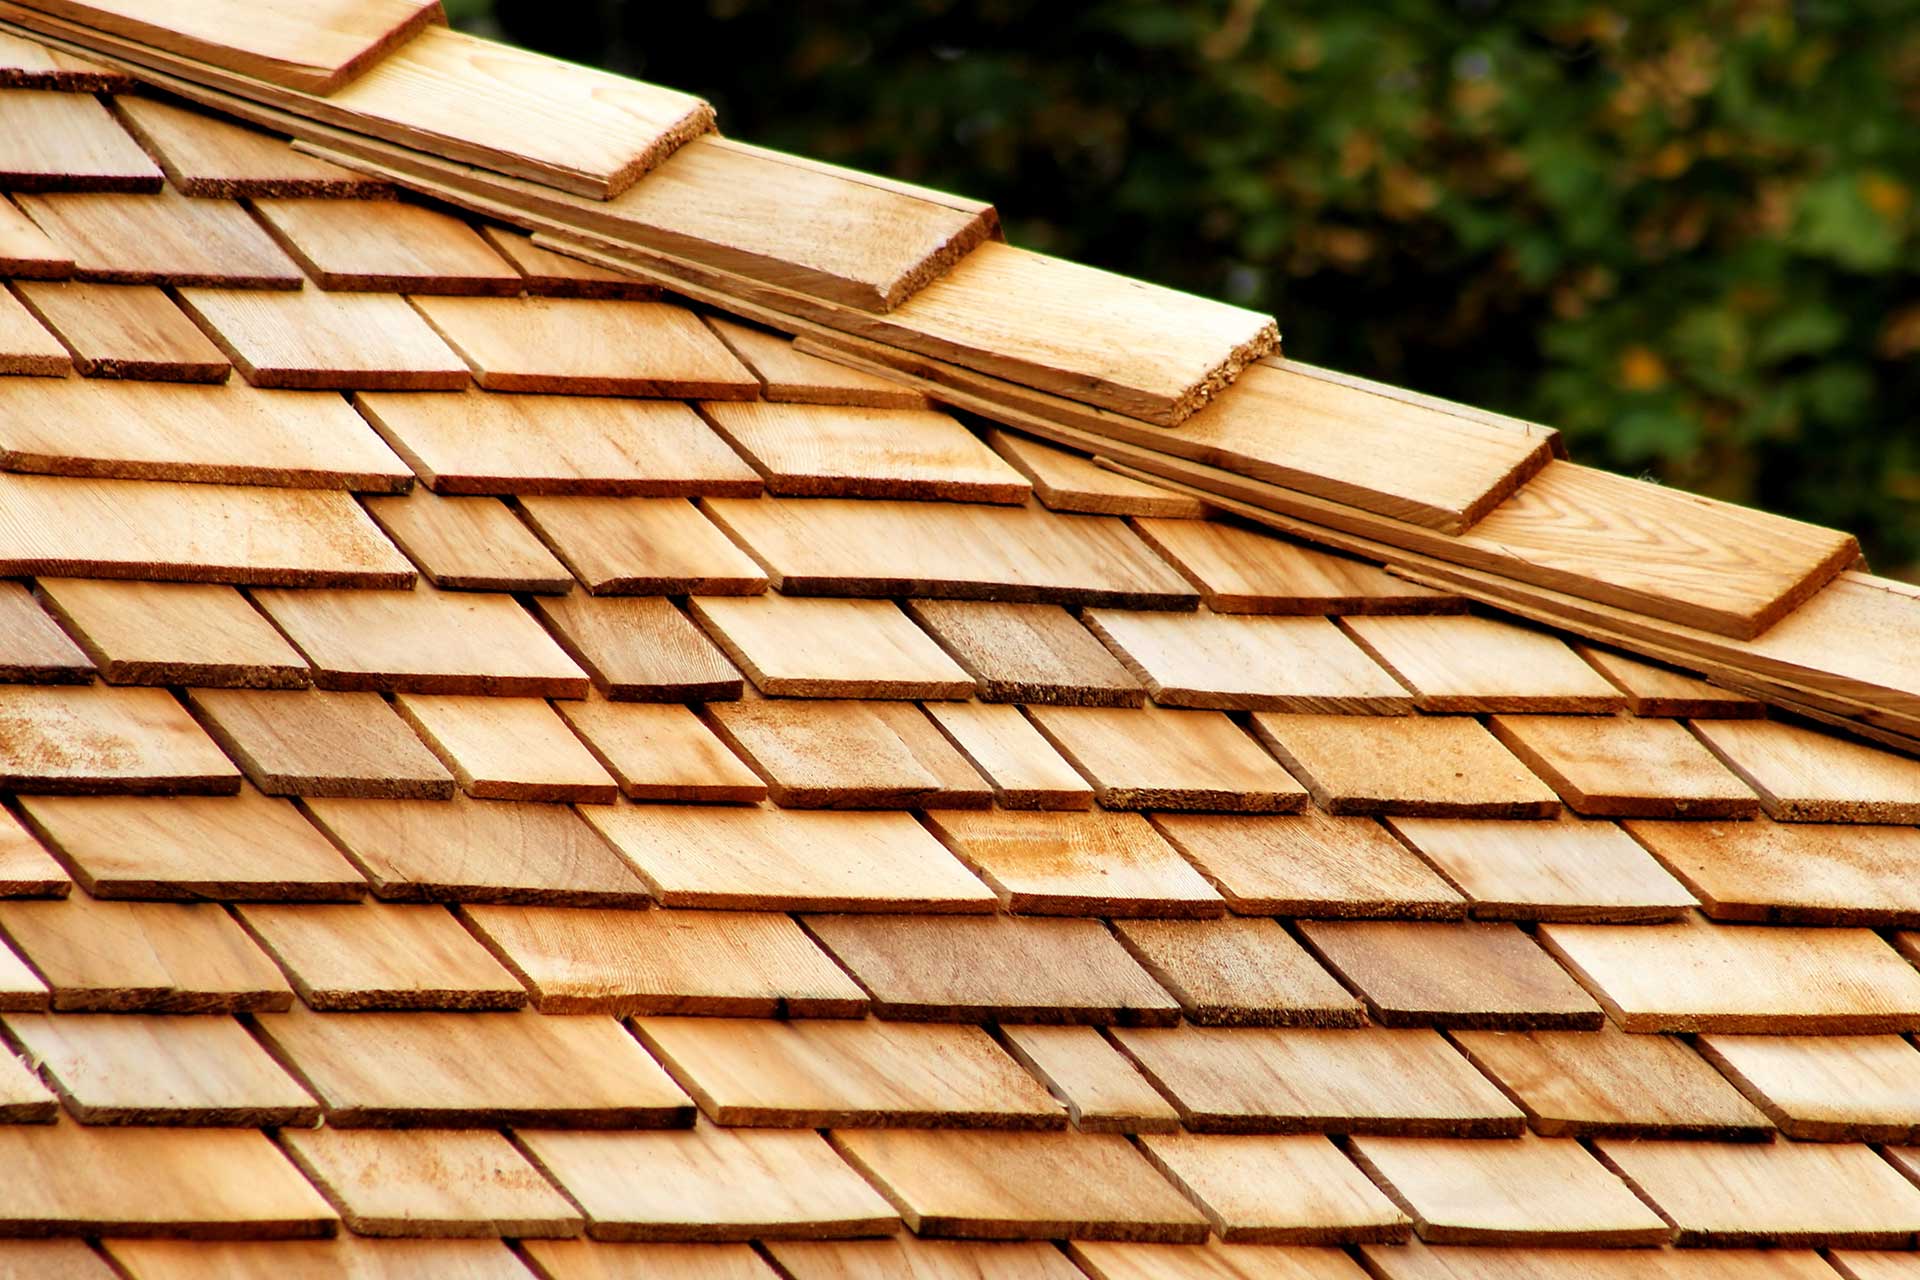 Cedar roof installation in Colleyville Texas 76034